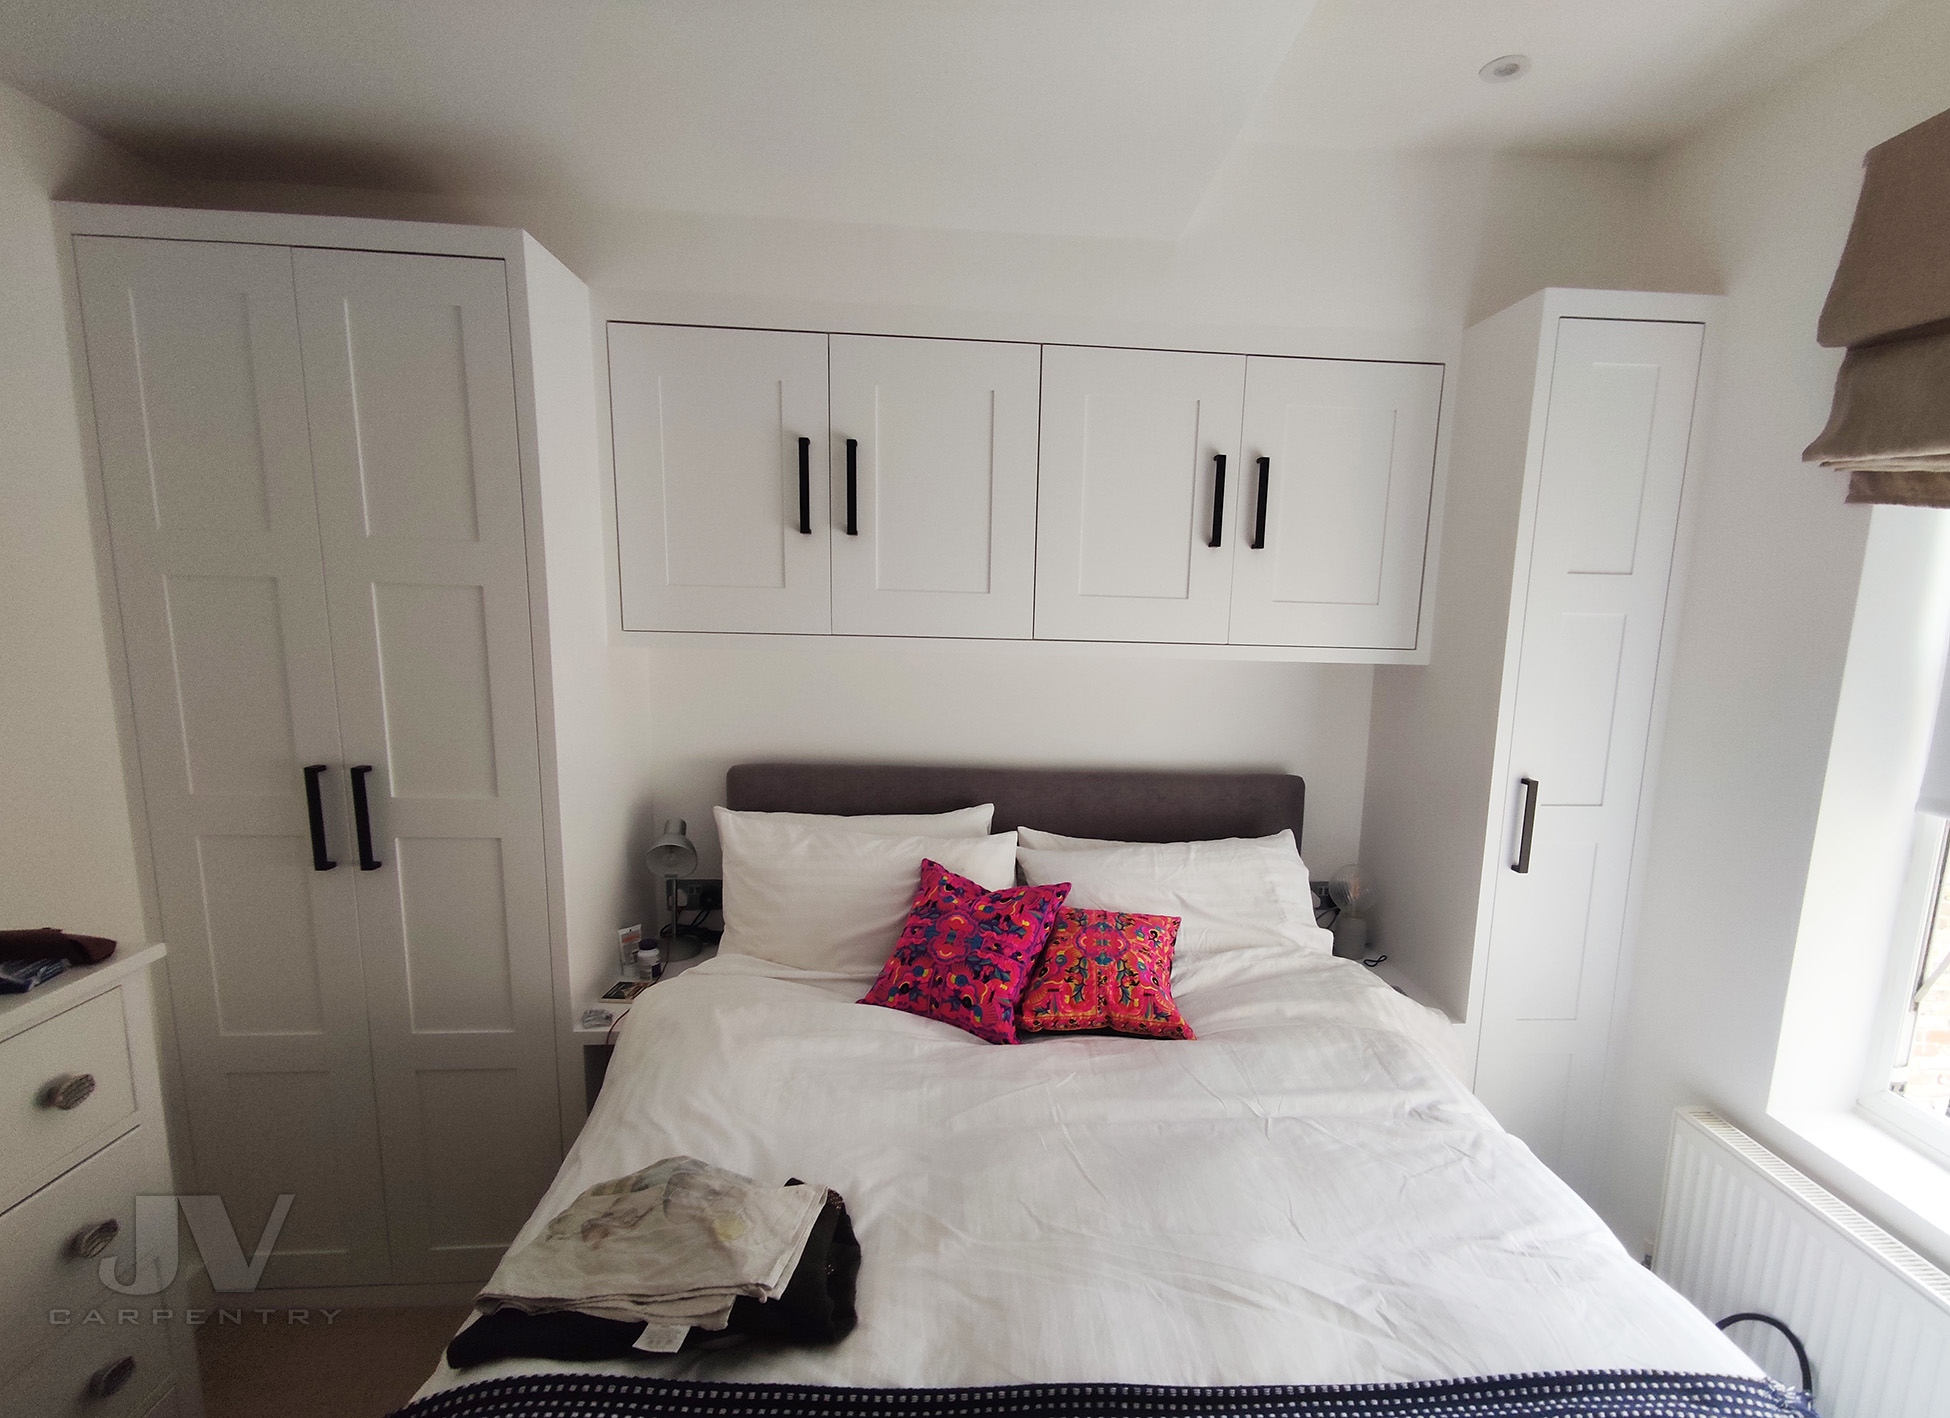 slimline fitted bedroom furniture